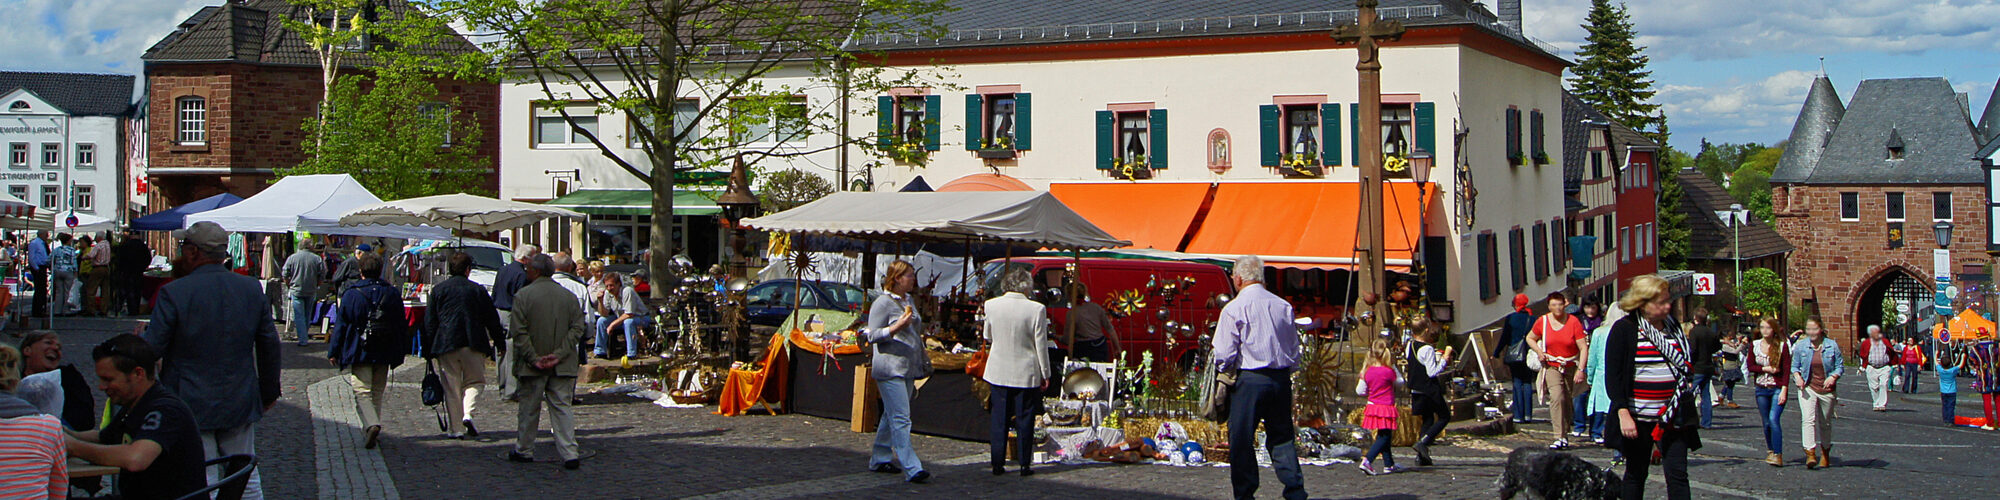 Marktplatz Nideggen